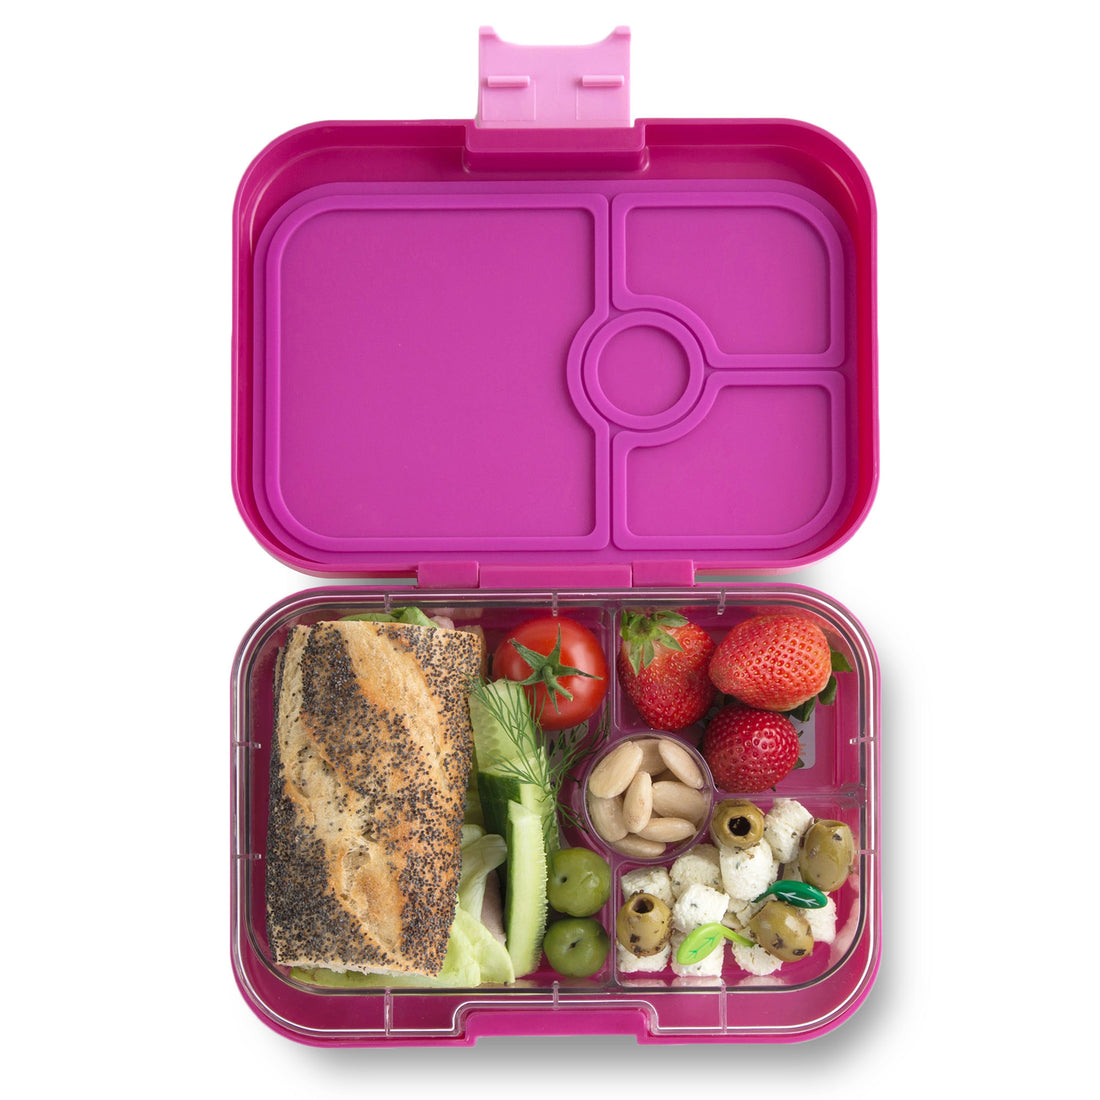 yumbox-panino-malibu-purple-vintage-california-4-compartment-lunch-box- (4)